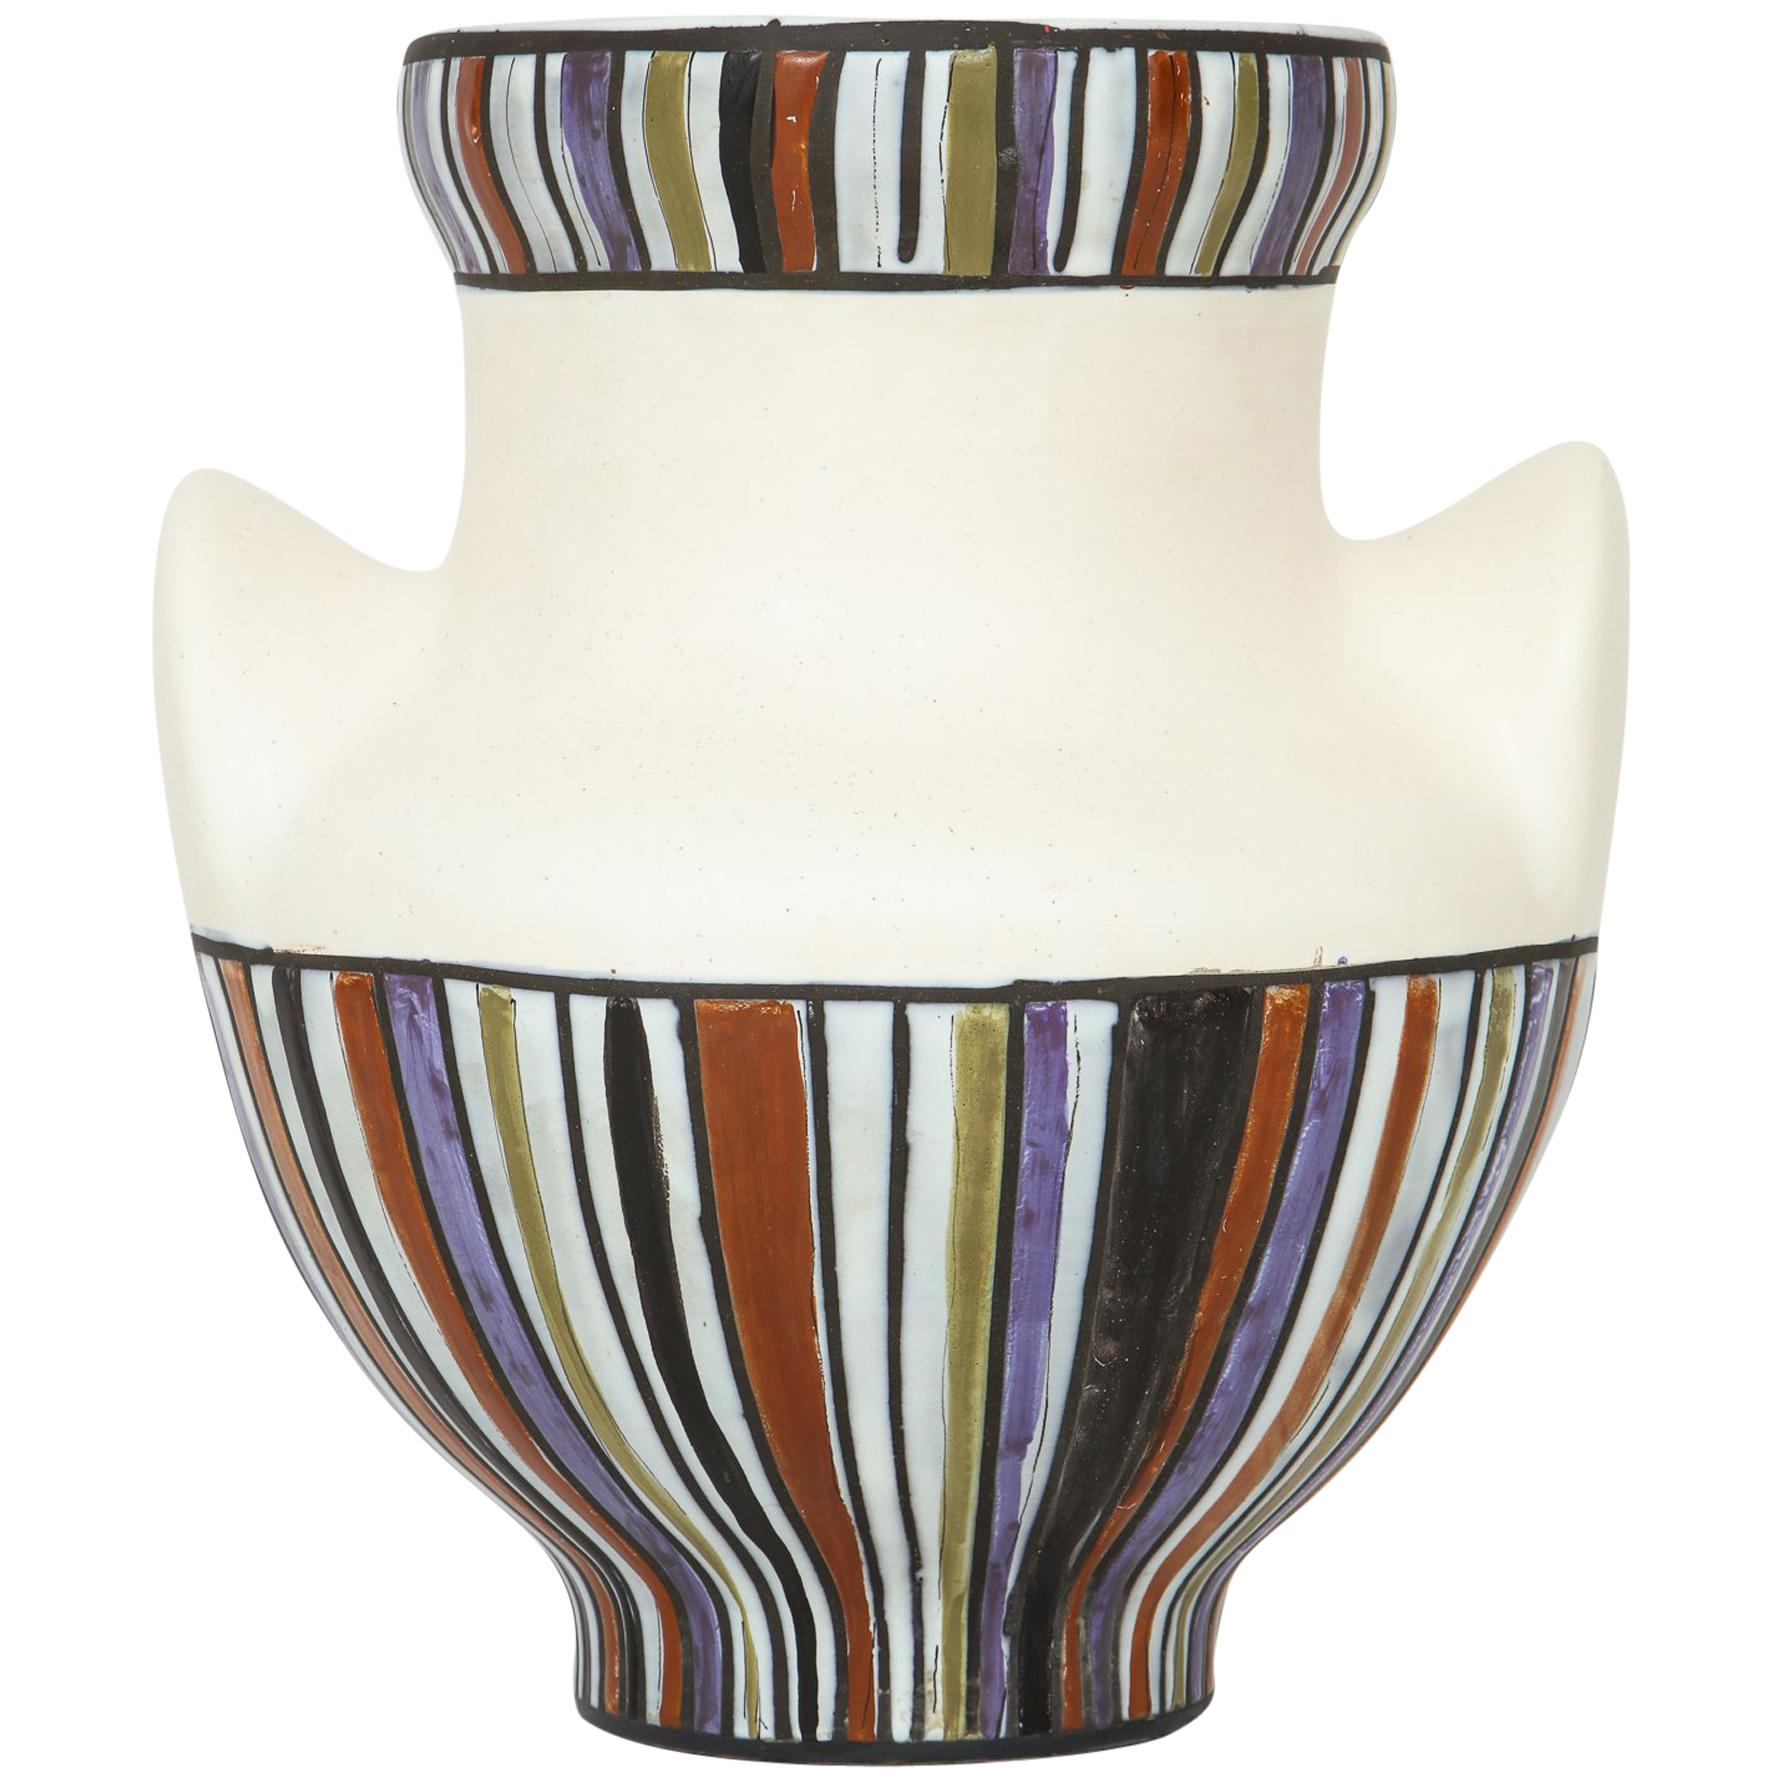 Large Roger Capron Oreilles Vase with Polychrome Decoration